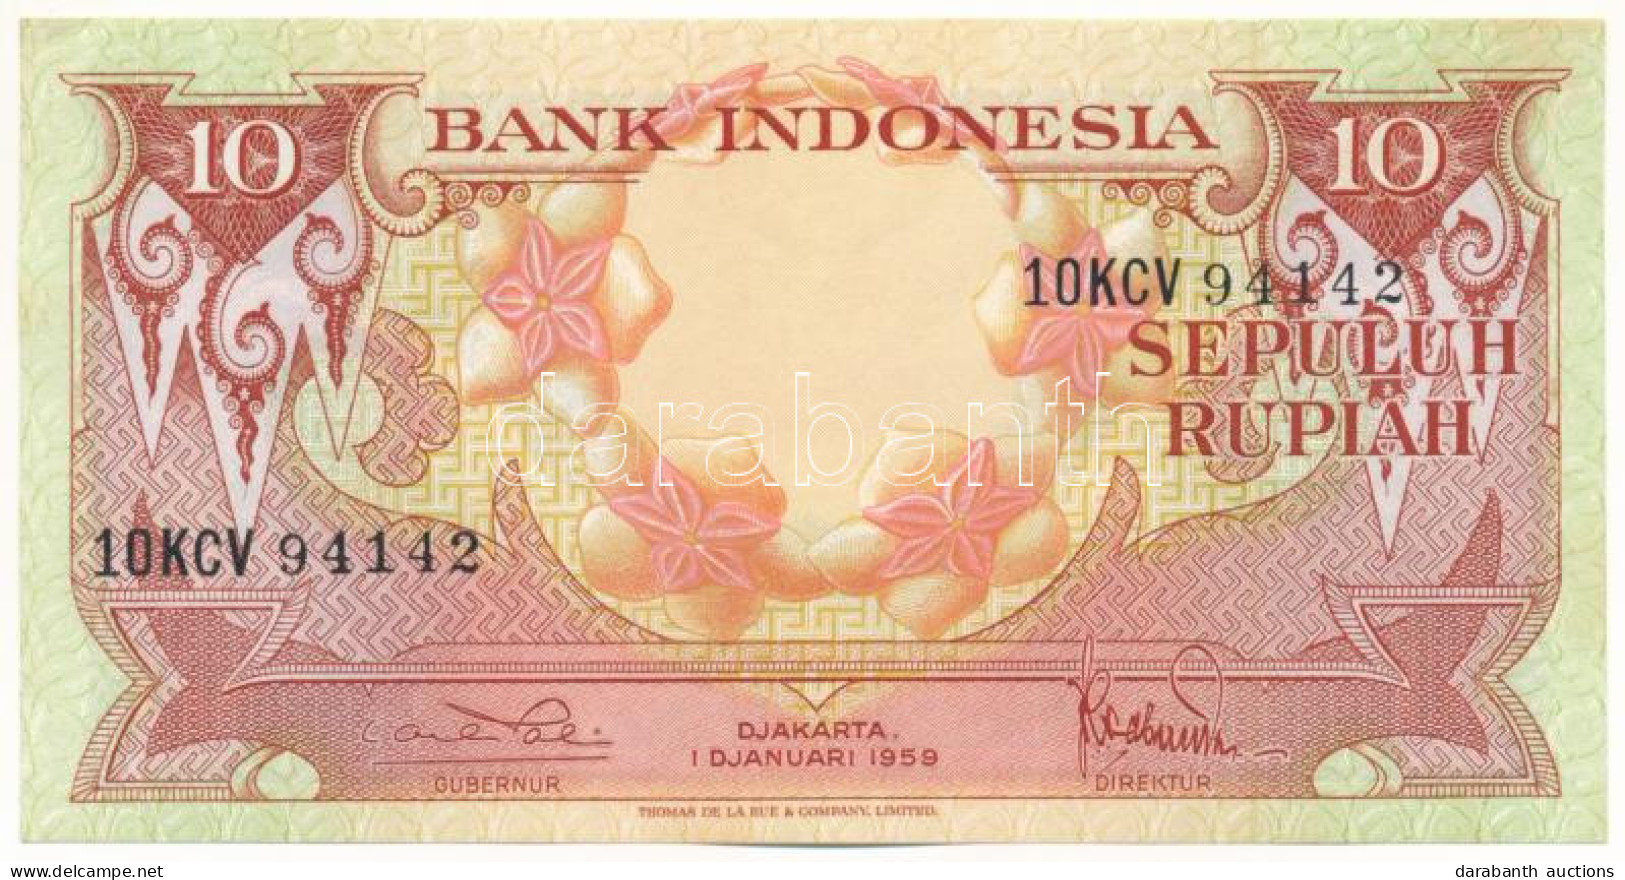 Indonézia 1959. 10R "'10KCV 94142" T:AU  Indonesia 1959. 10 Rupiah "10KCV 94142" C:AU  Krause P#66 - Ohne Zuordnung